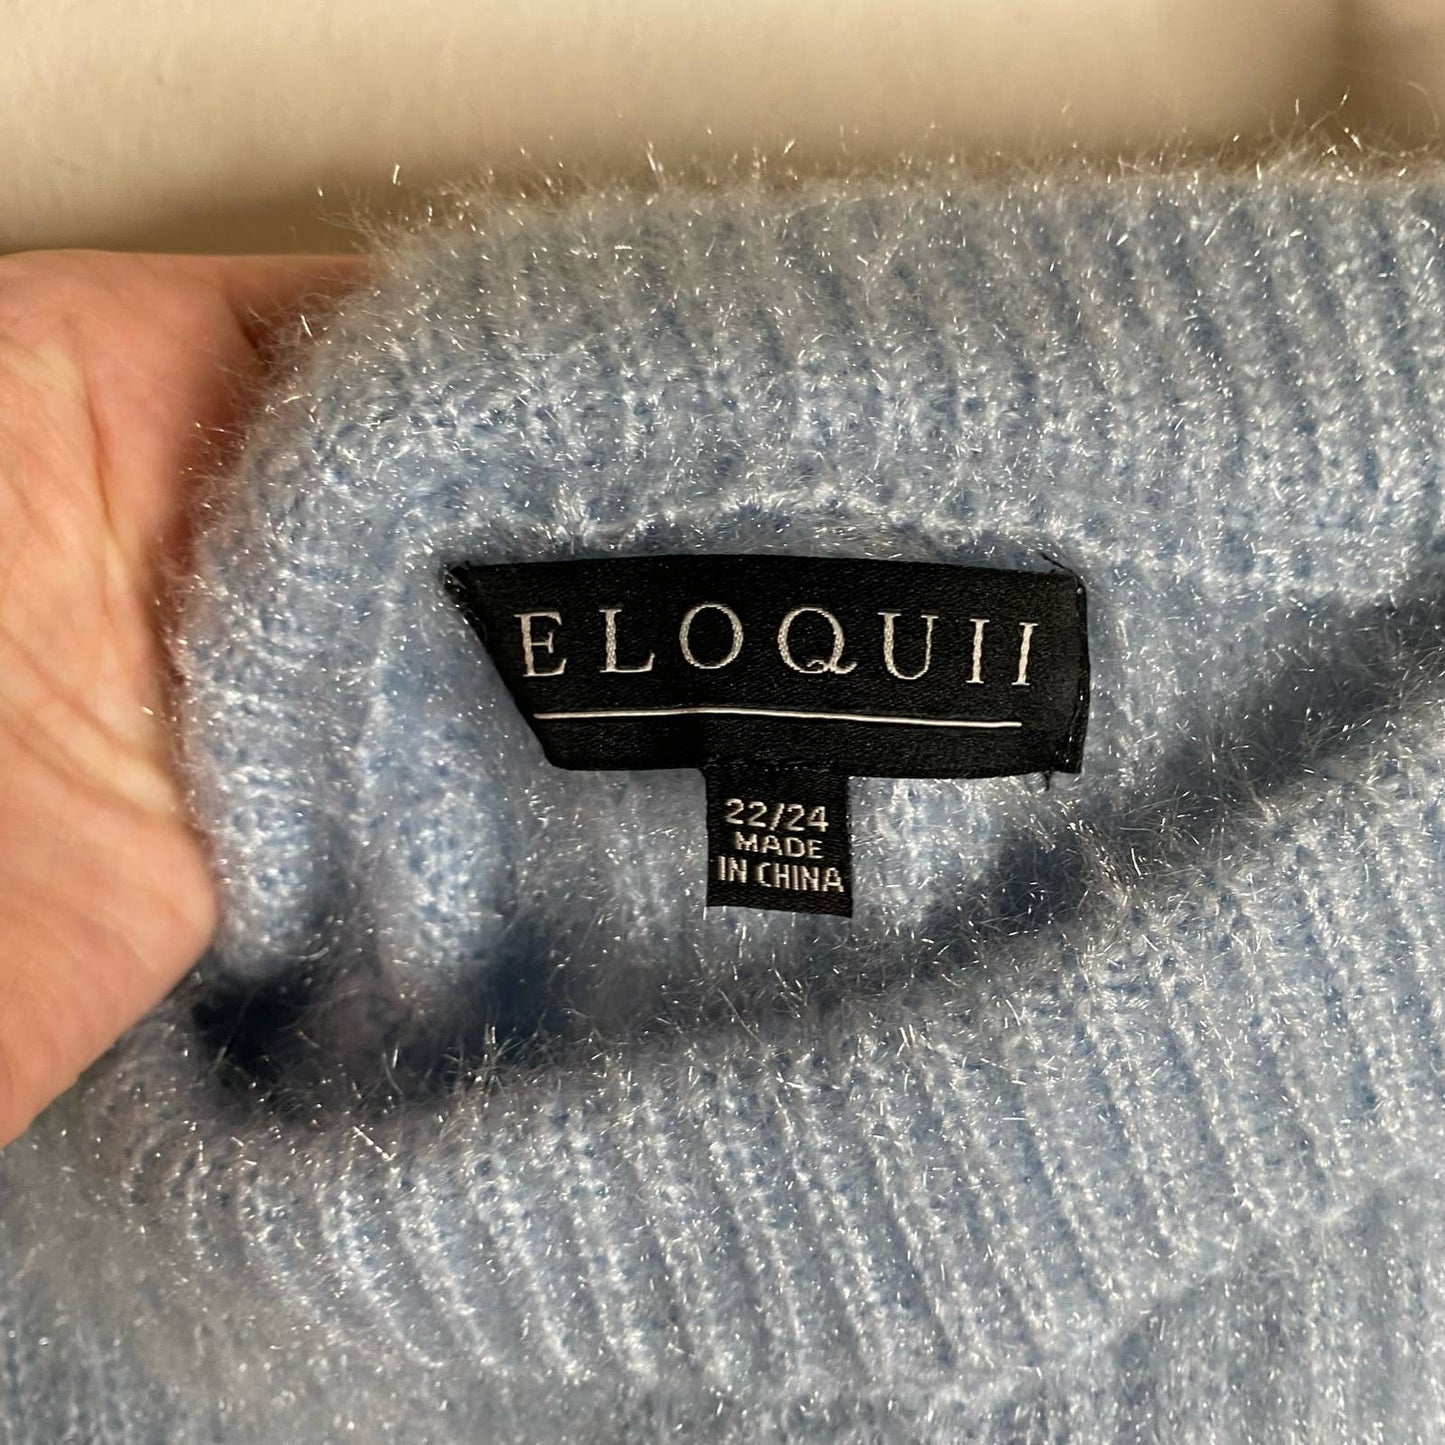 ELOQUII Light Blue Fuzzy Ribbed Sweater Lounge Shorts Size 22/24